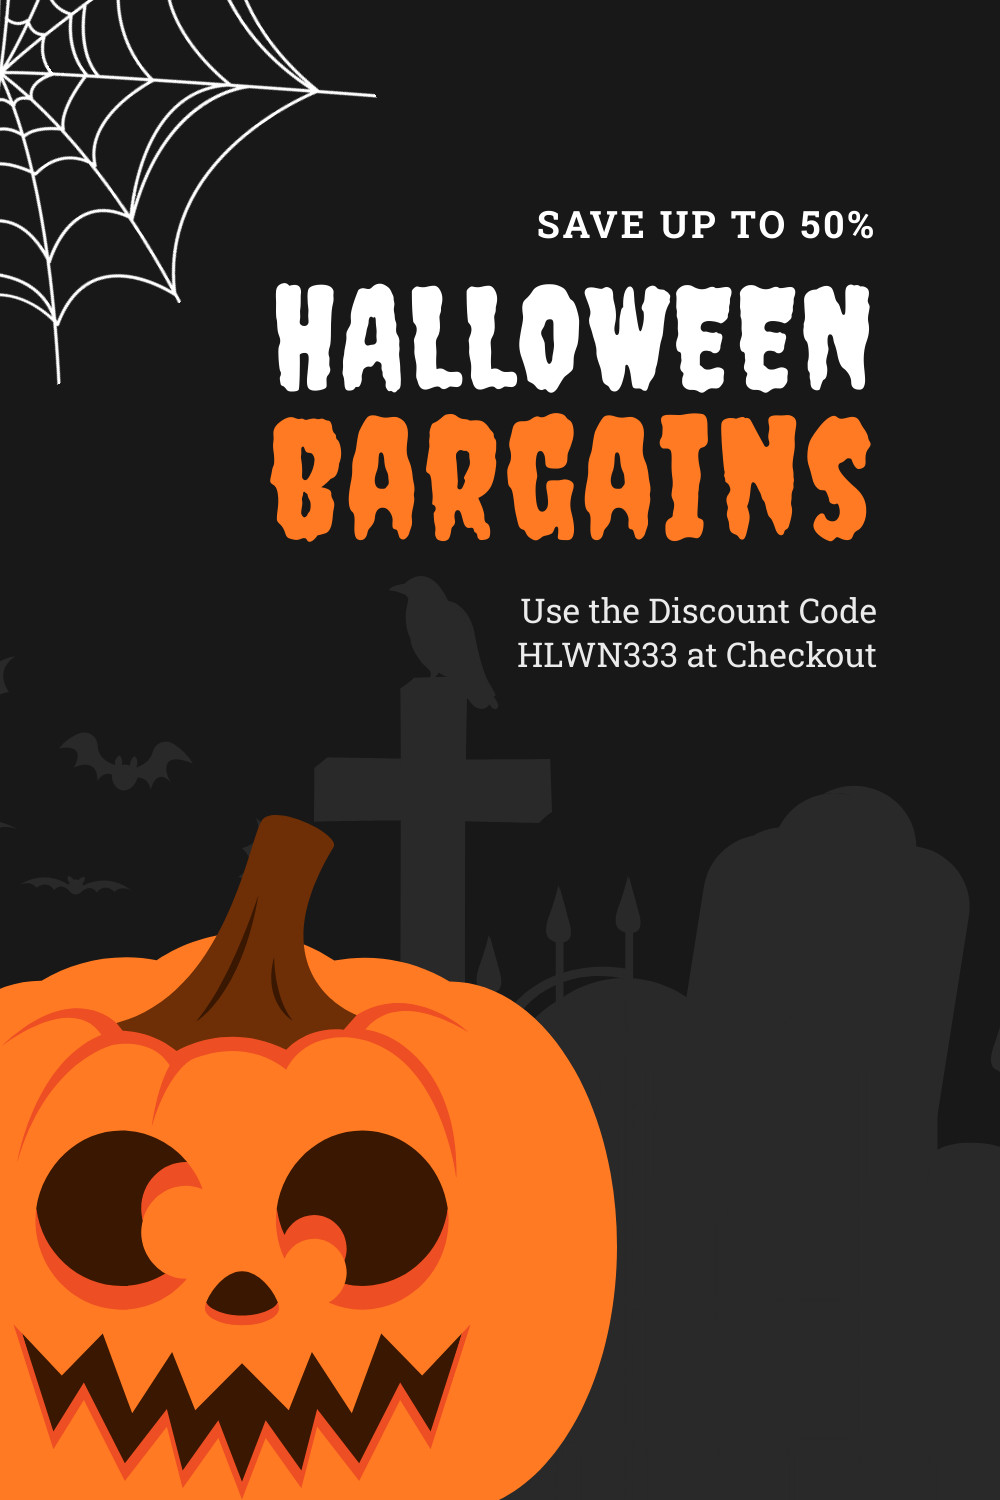 Halloween Bargains Cemetery Pumpkin Inline Rectangle 300x250